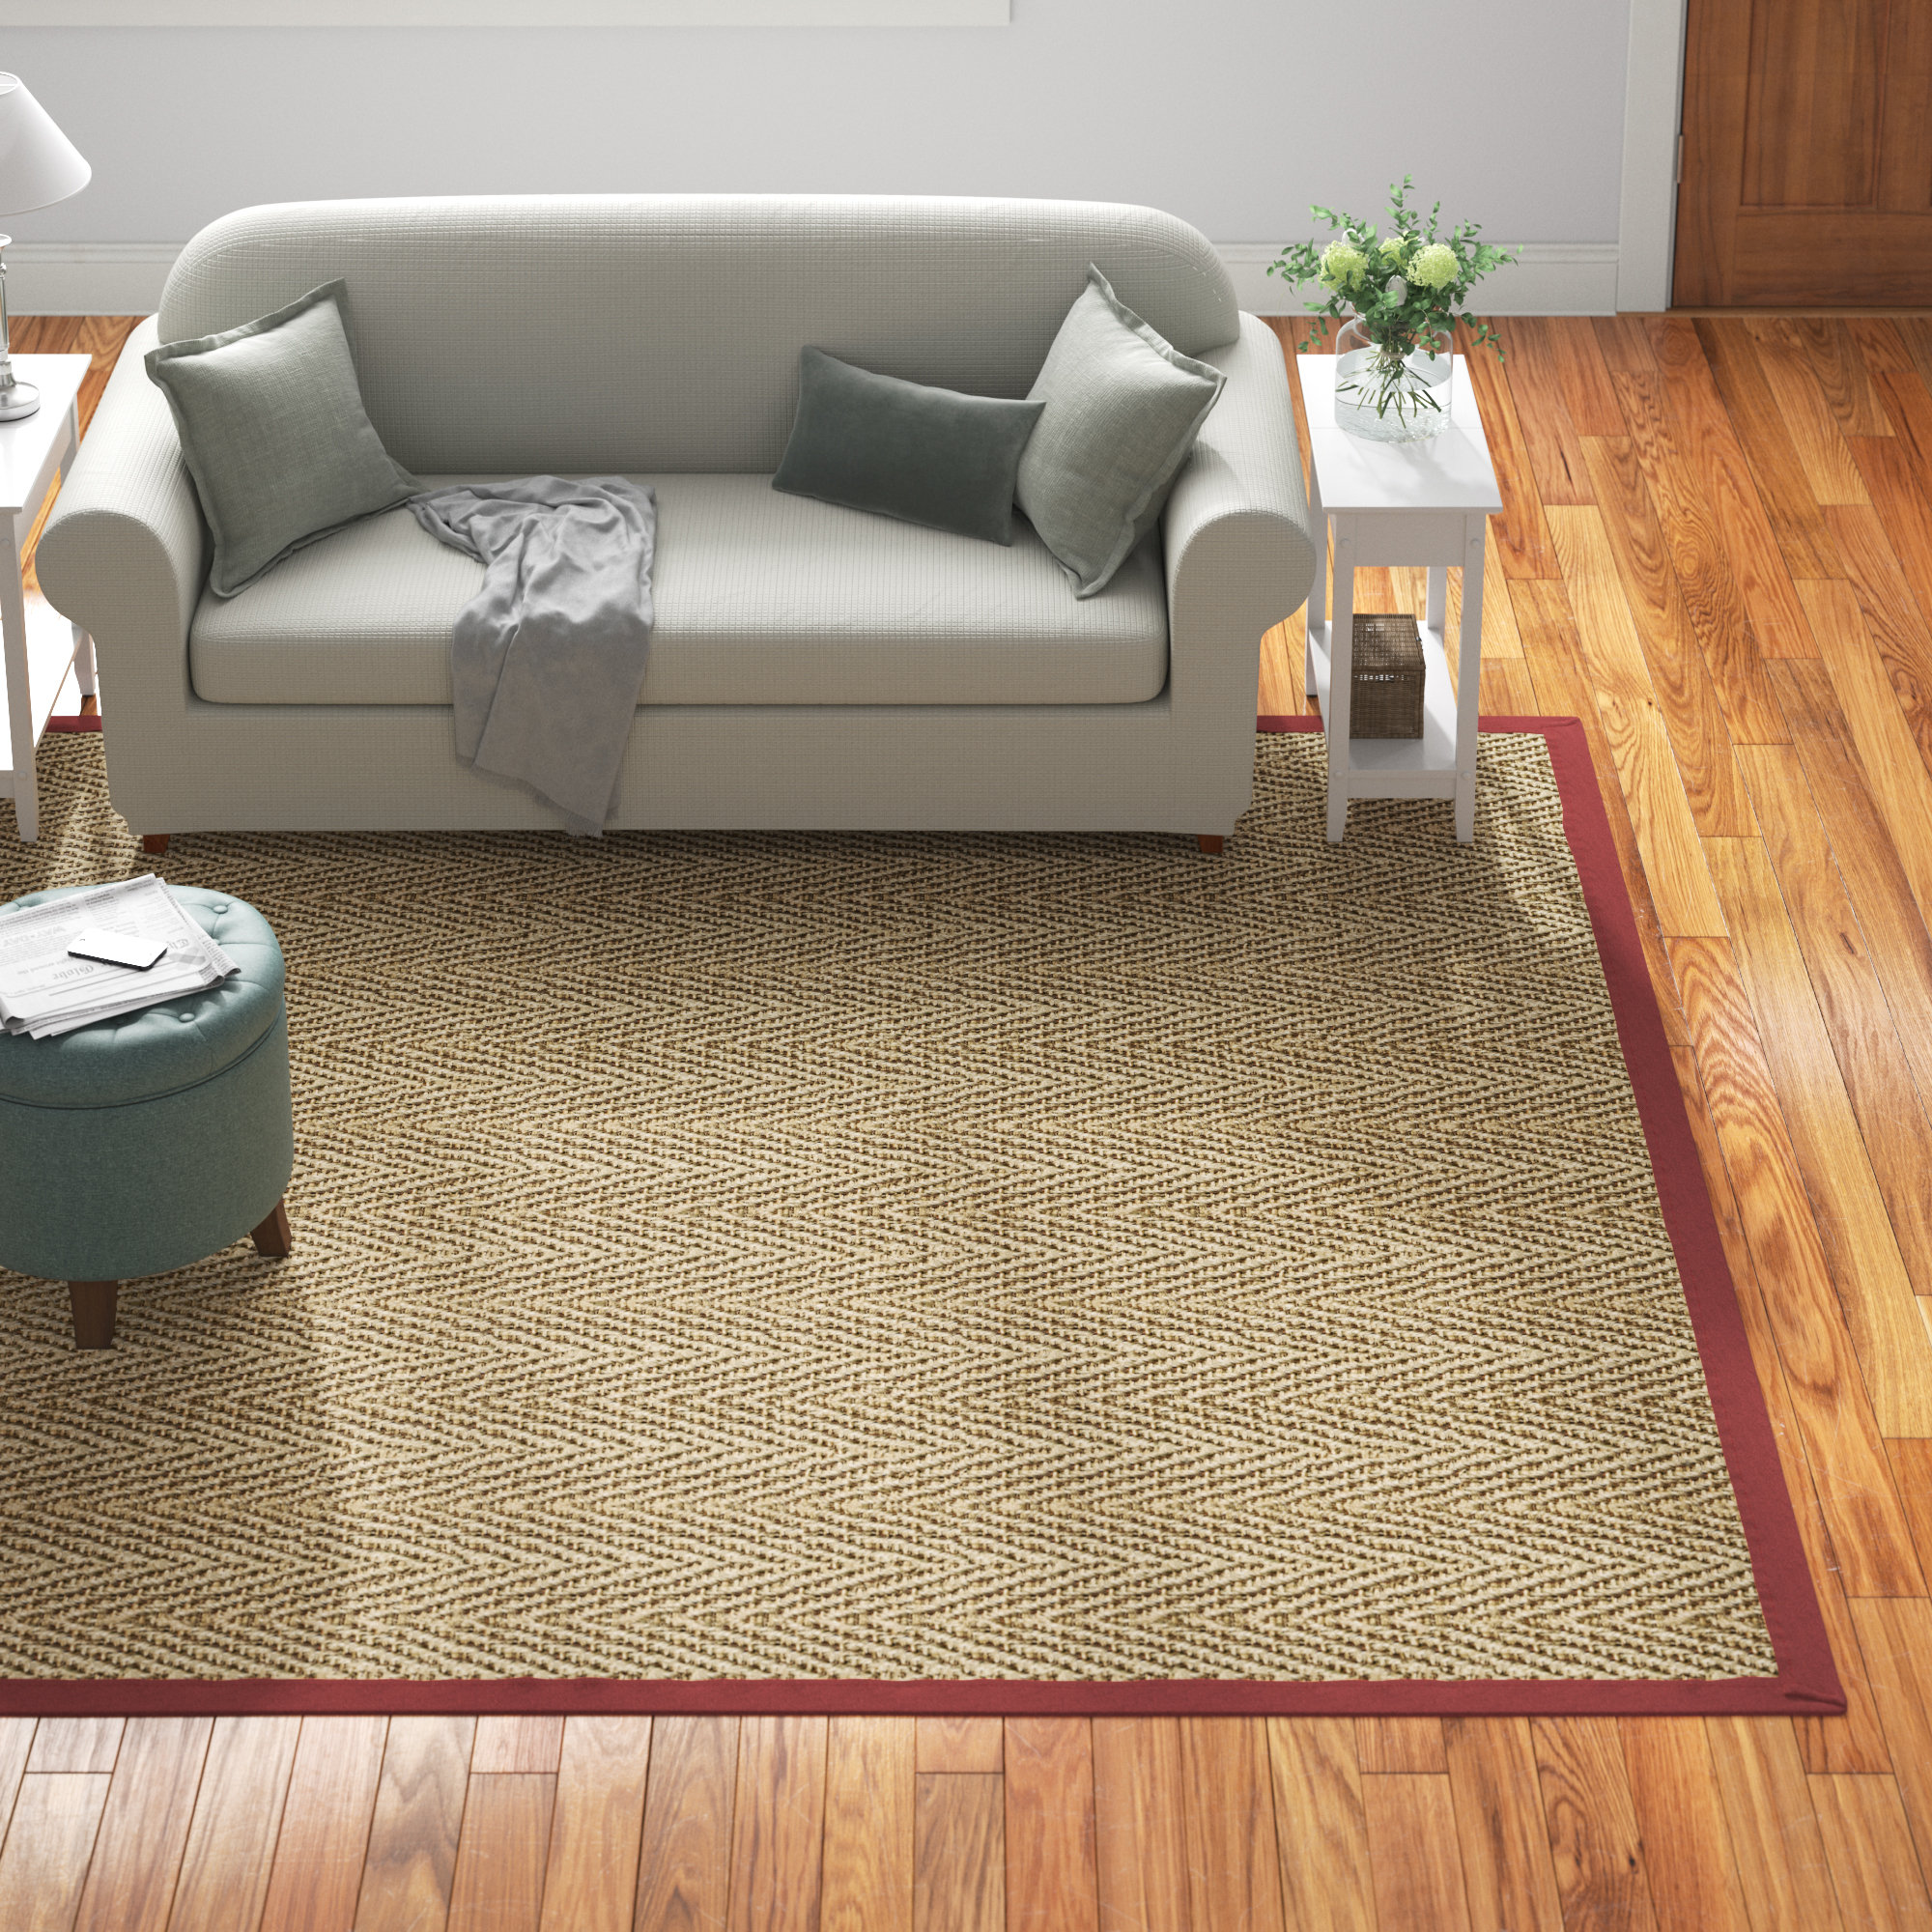 Natural Bamboo 5' X 8' Floor Mat, Bamboo Area Rug Indoor Carpet Non Skid